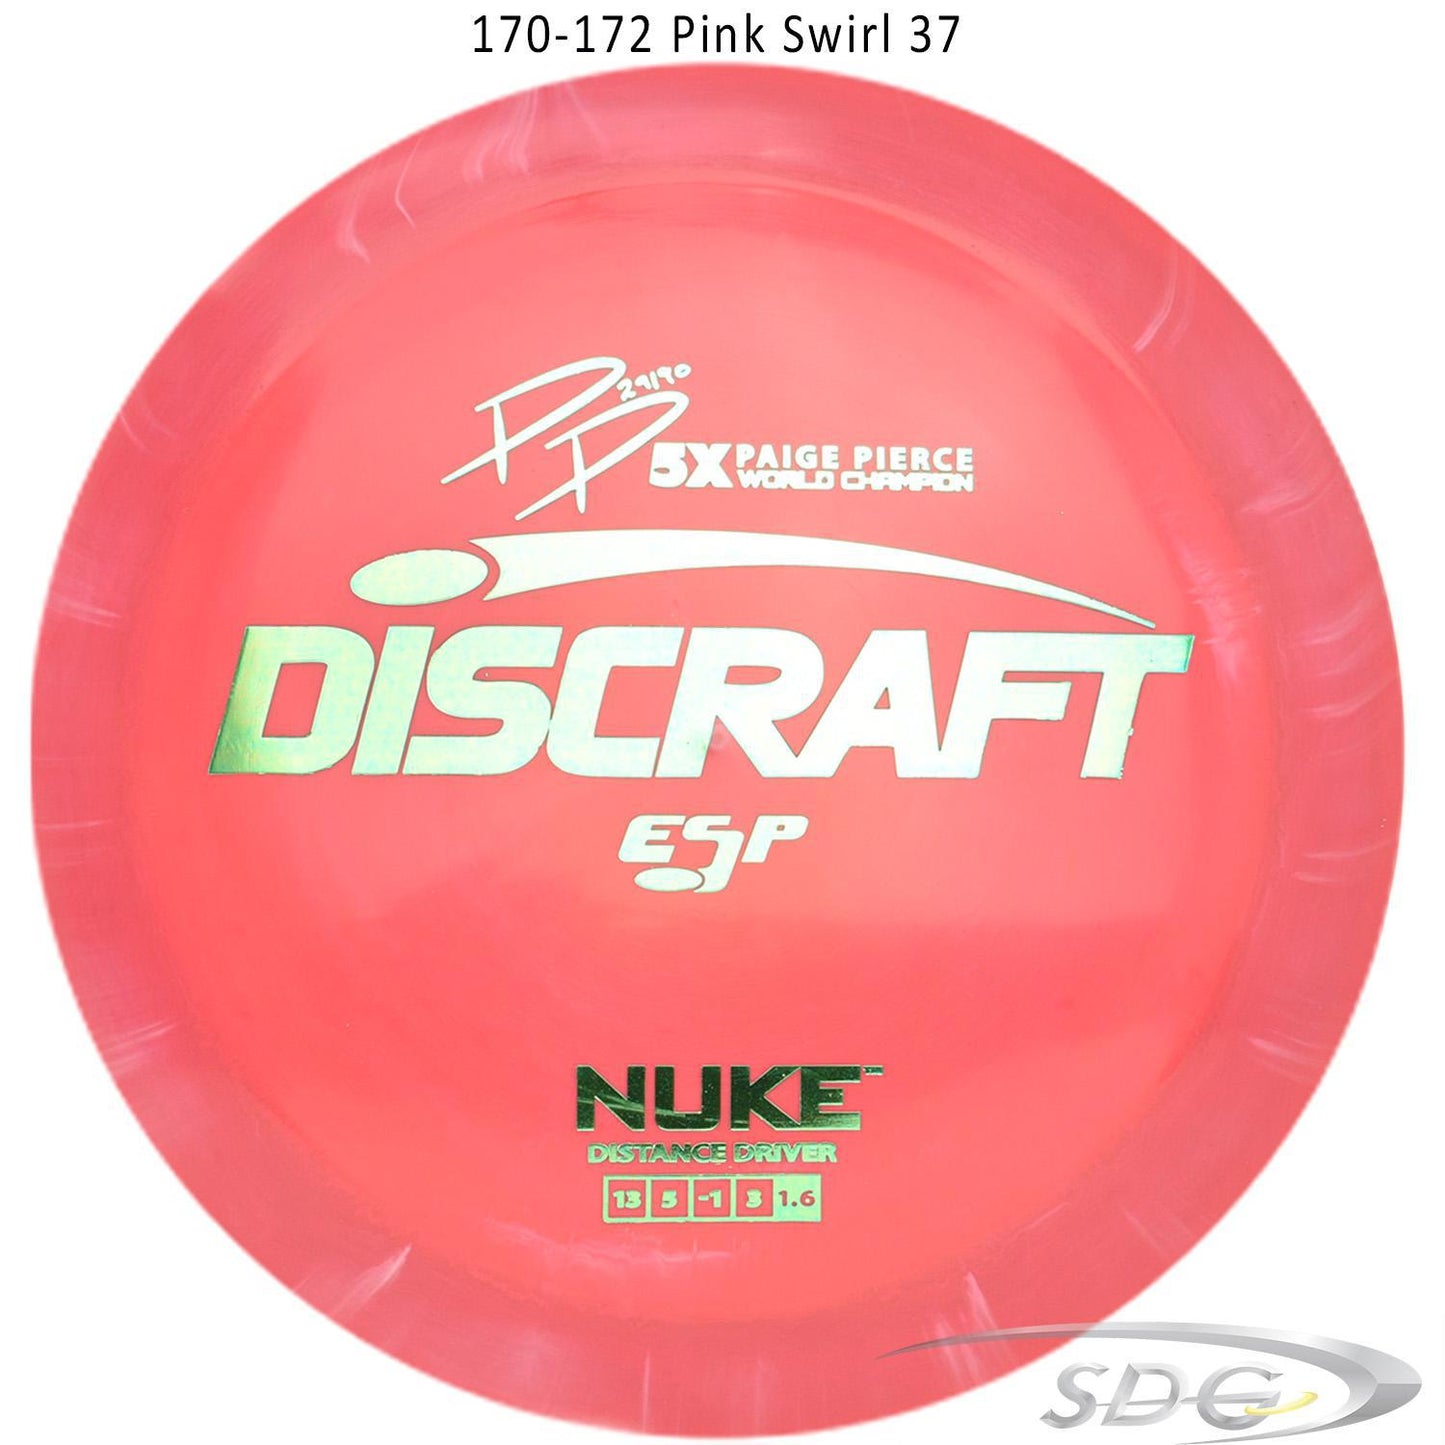 discraft-esp-nuke-paige-pierce-signature-disc-golf-distance-driver 170-172 Pink Swirl 37